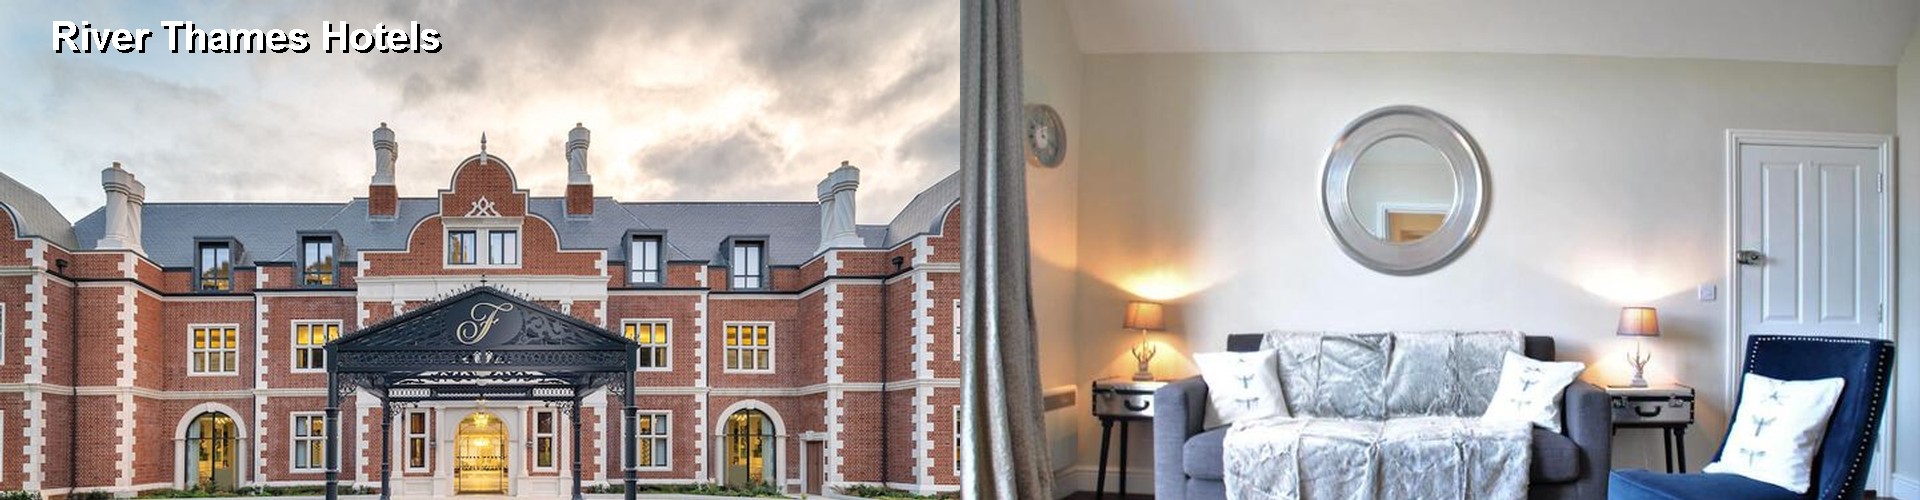 5 Best Hotels near River Thames